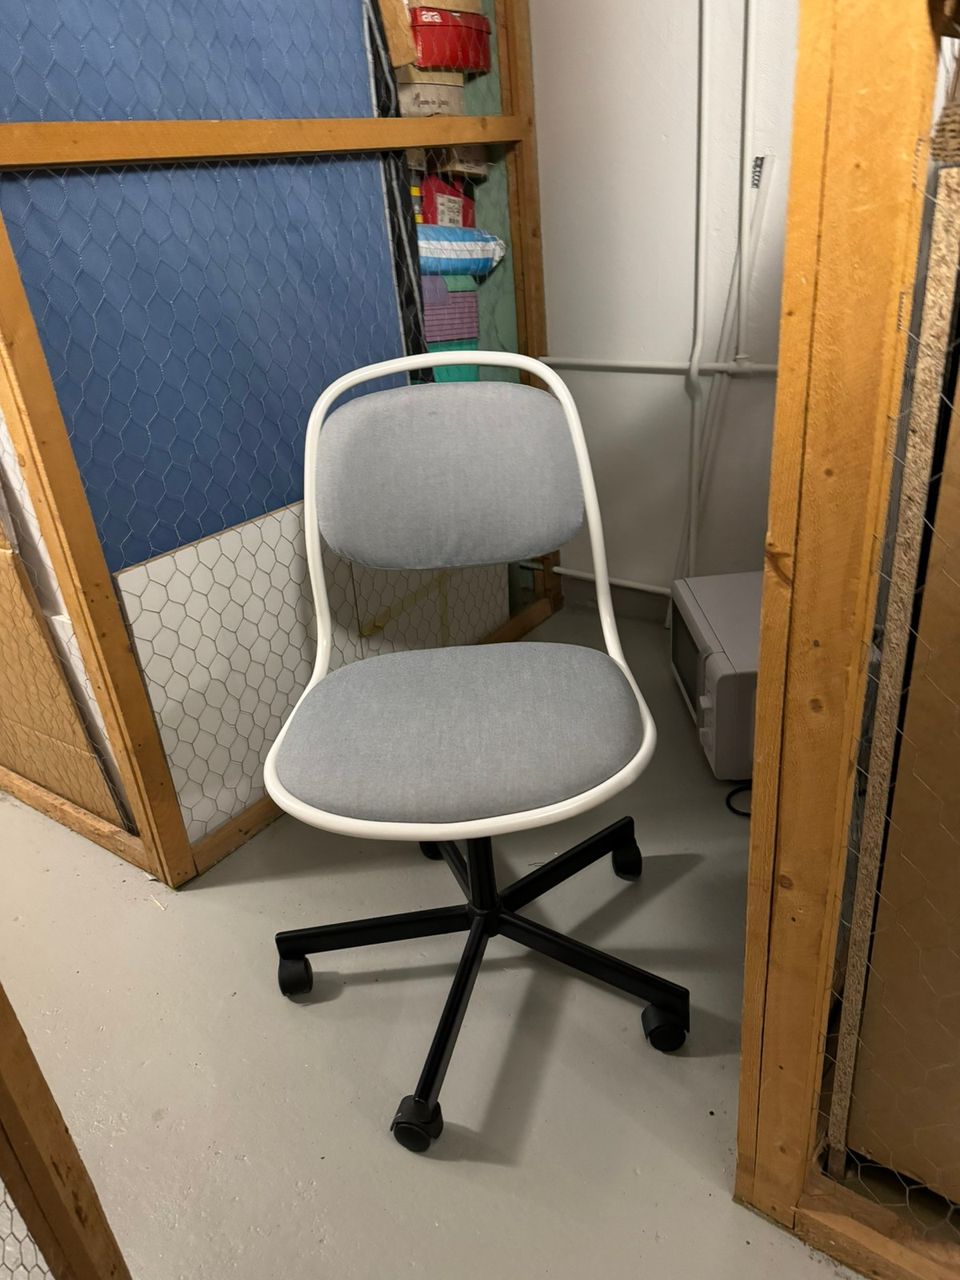 IKEA office chair